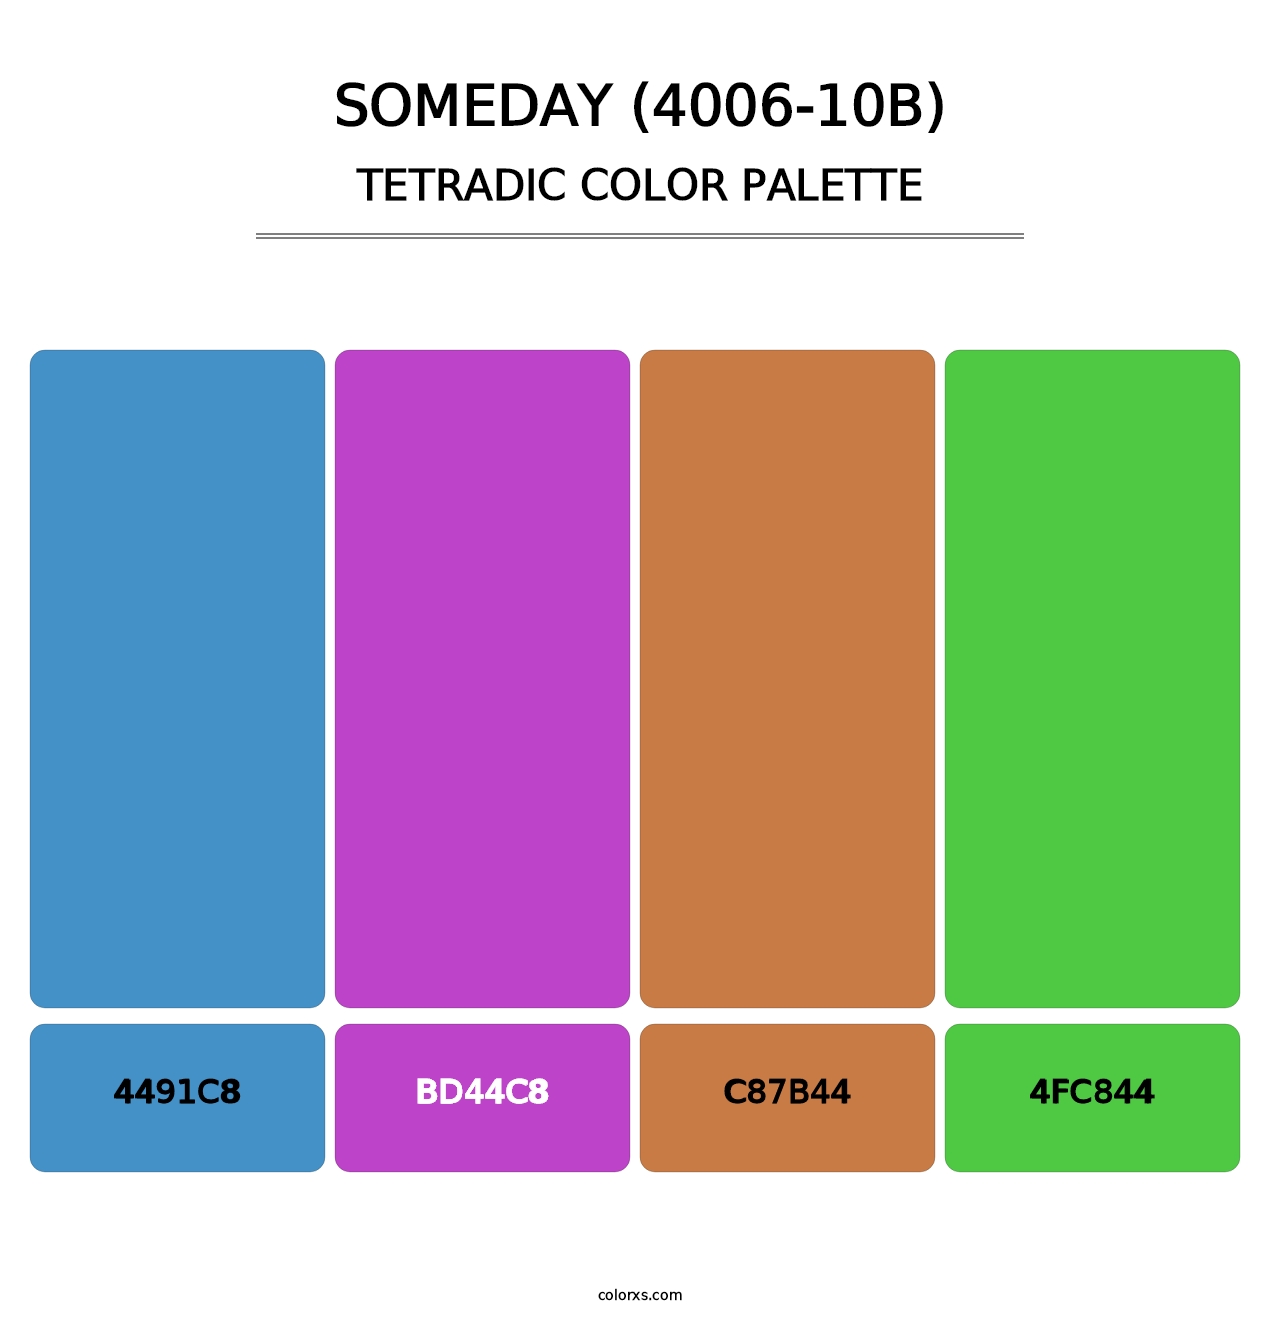 Someday (4006-10B) - Tetradic Color Palette